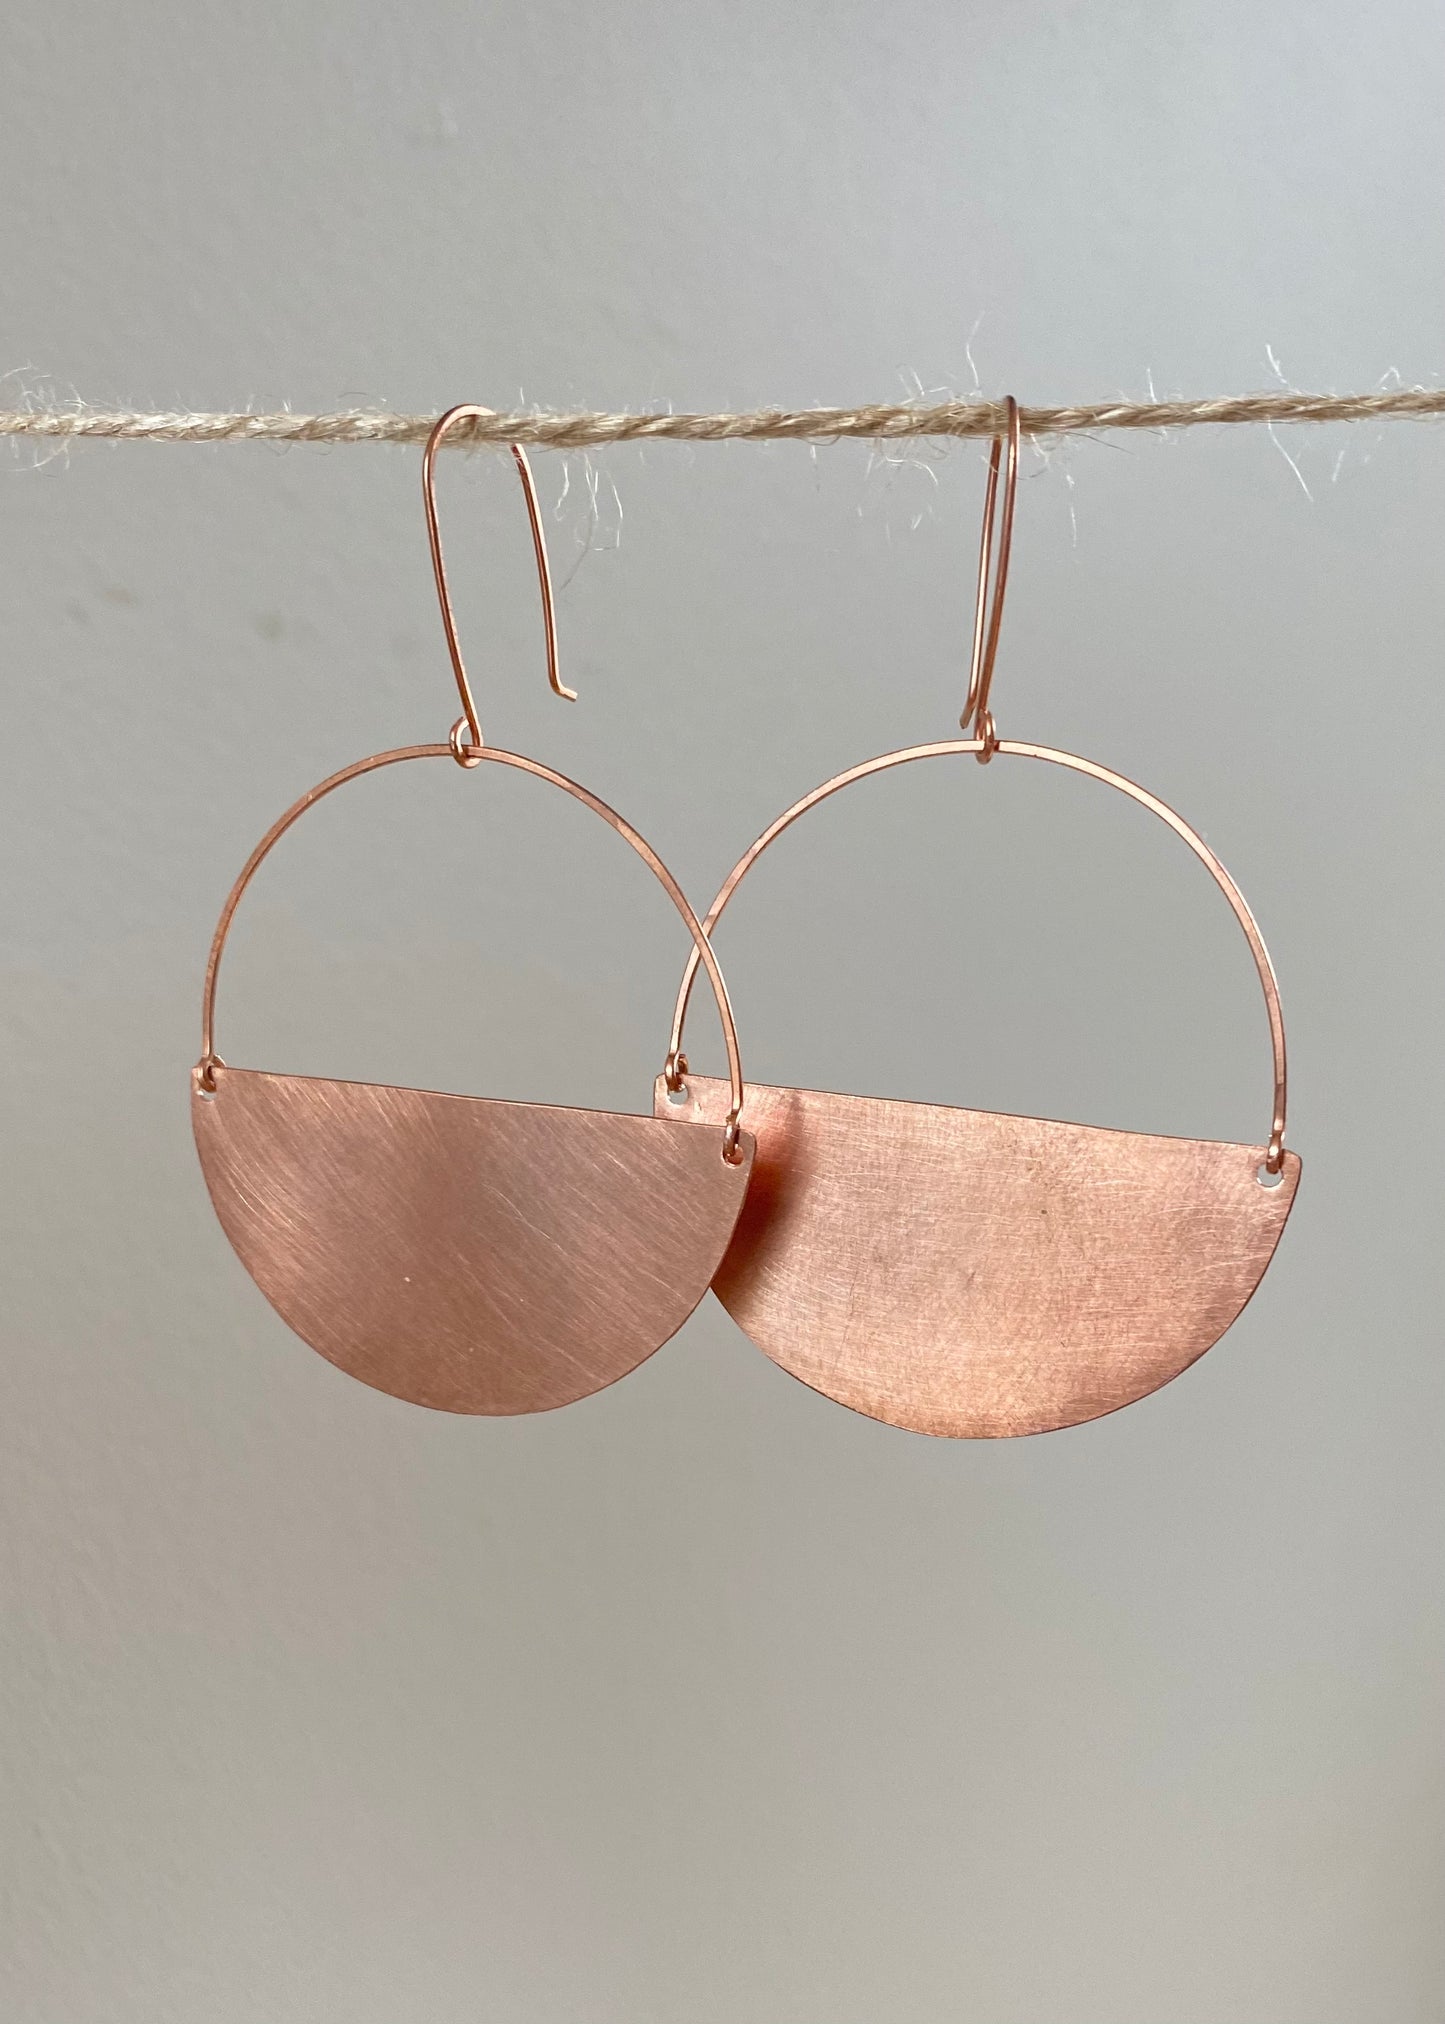 Copper Open Circle Earring